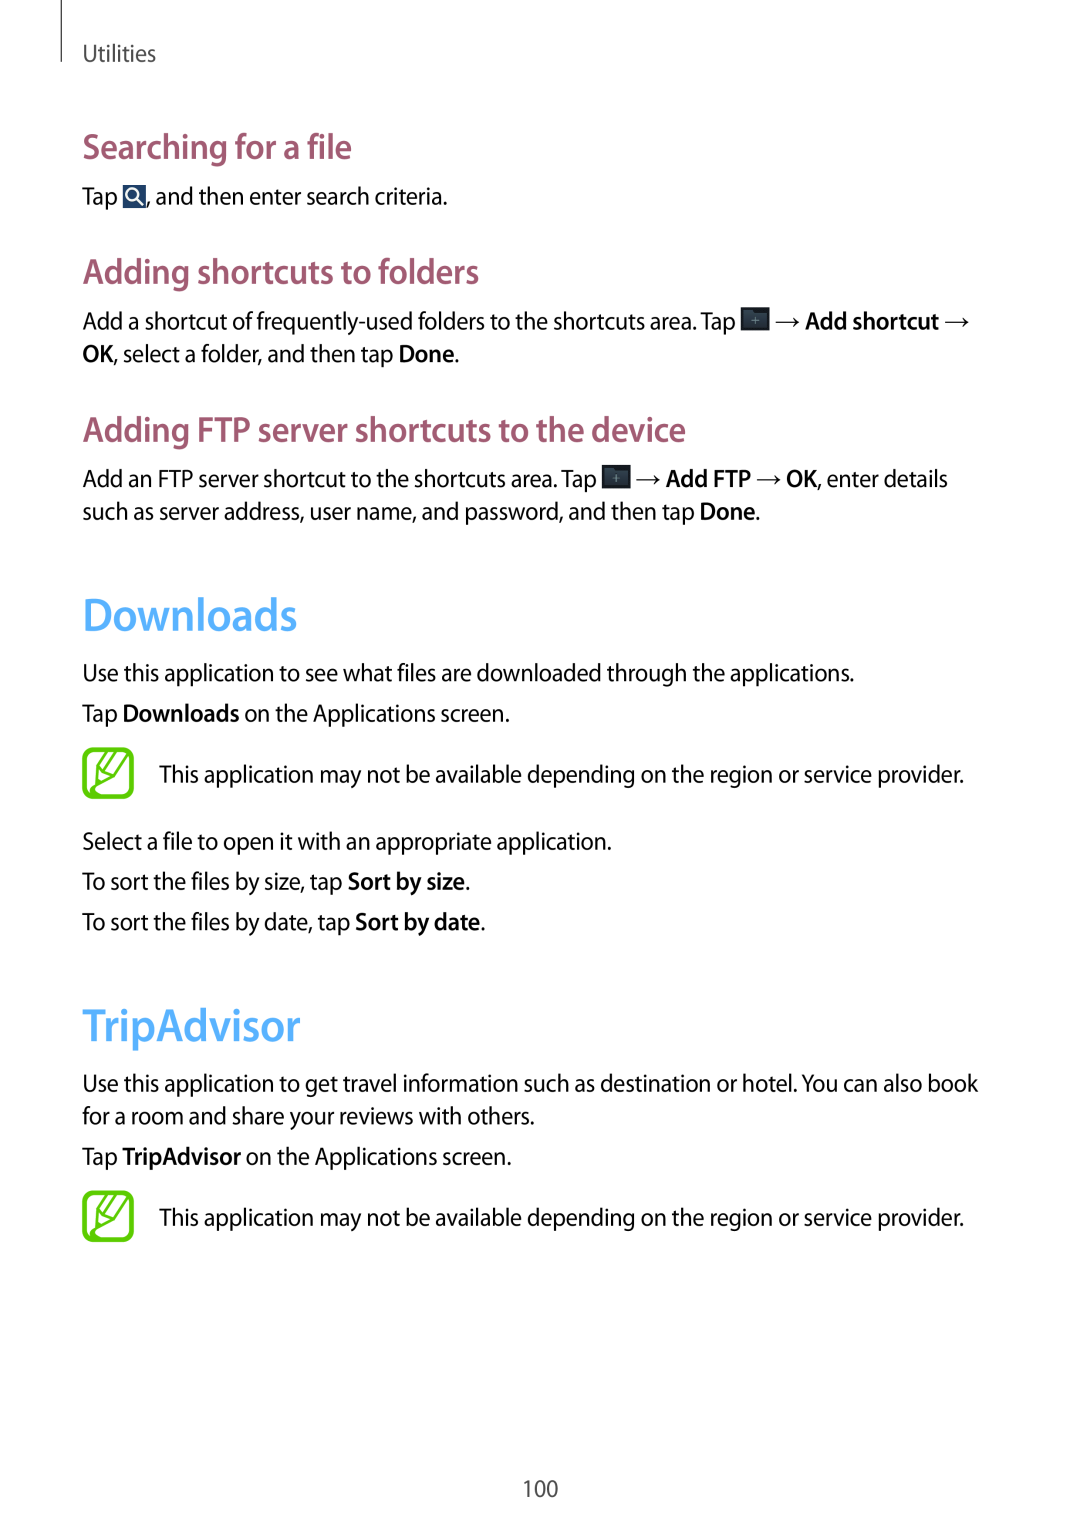 Samsung SM-G7102ZIAACR manual Downloads, TripAdvisor, Searching for a file, Adding shortcuts to folders, Utilities 